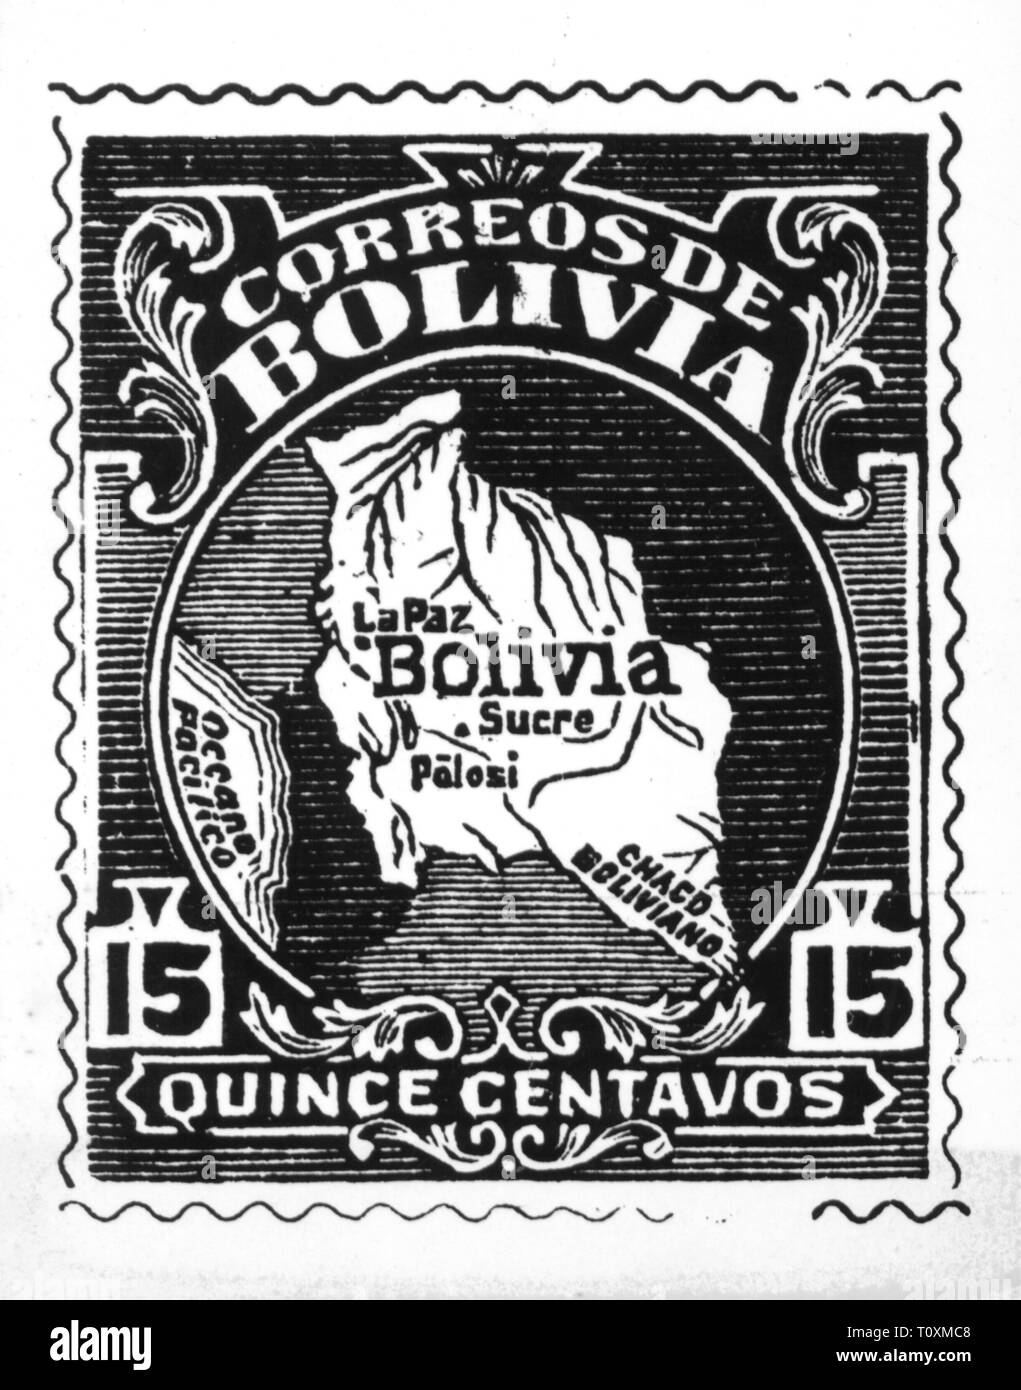 Mail, sellos, Bolivia, 15 centavos Postage Stamp, mapa, fecha de emisión:  1919, Additional-Rights-Clearance-Info-Not-Available Fotografía de stock -  Alamy